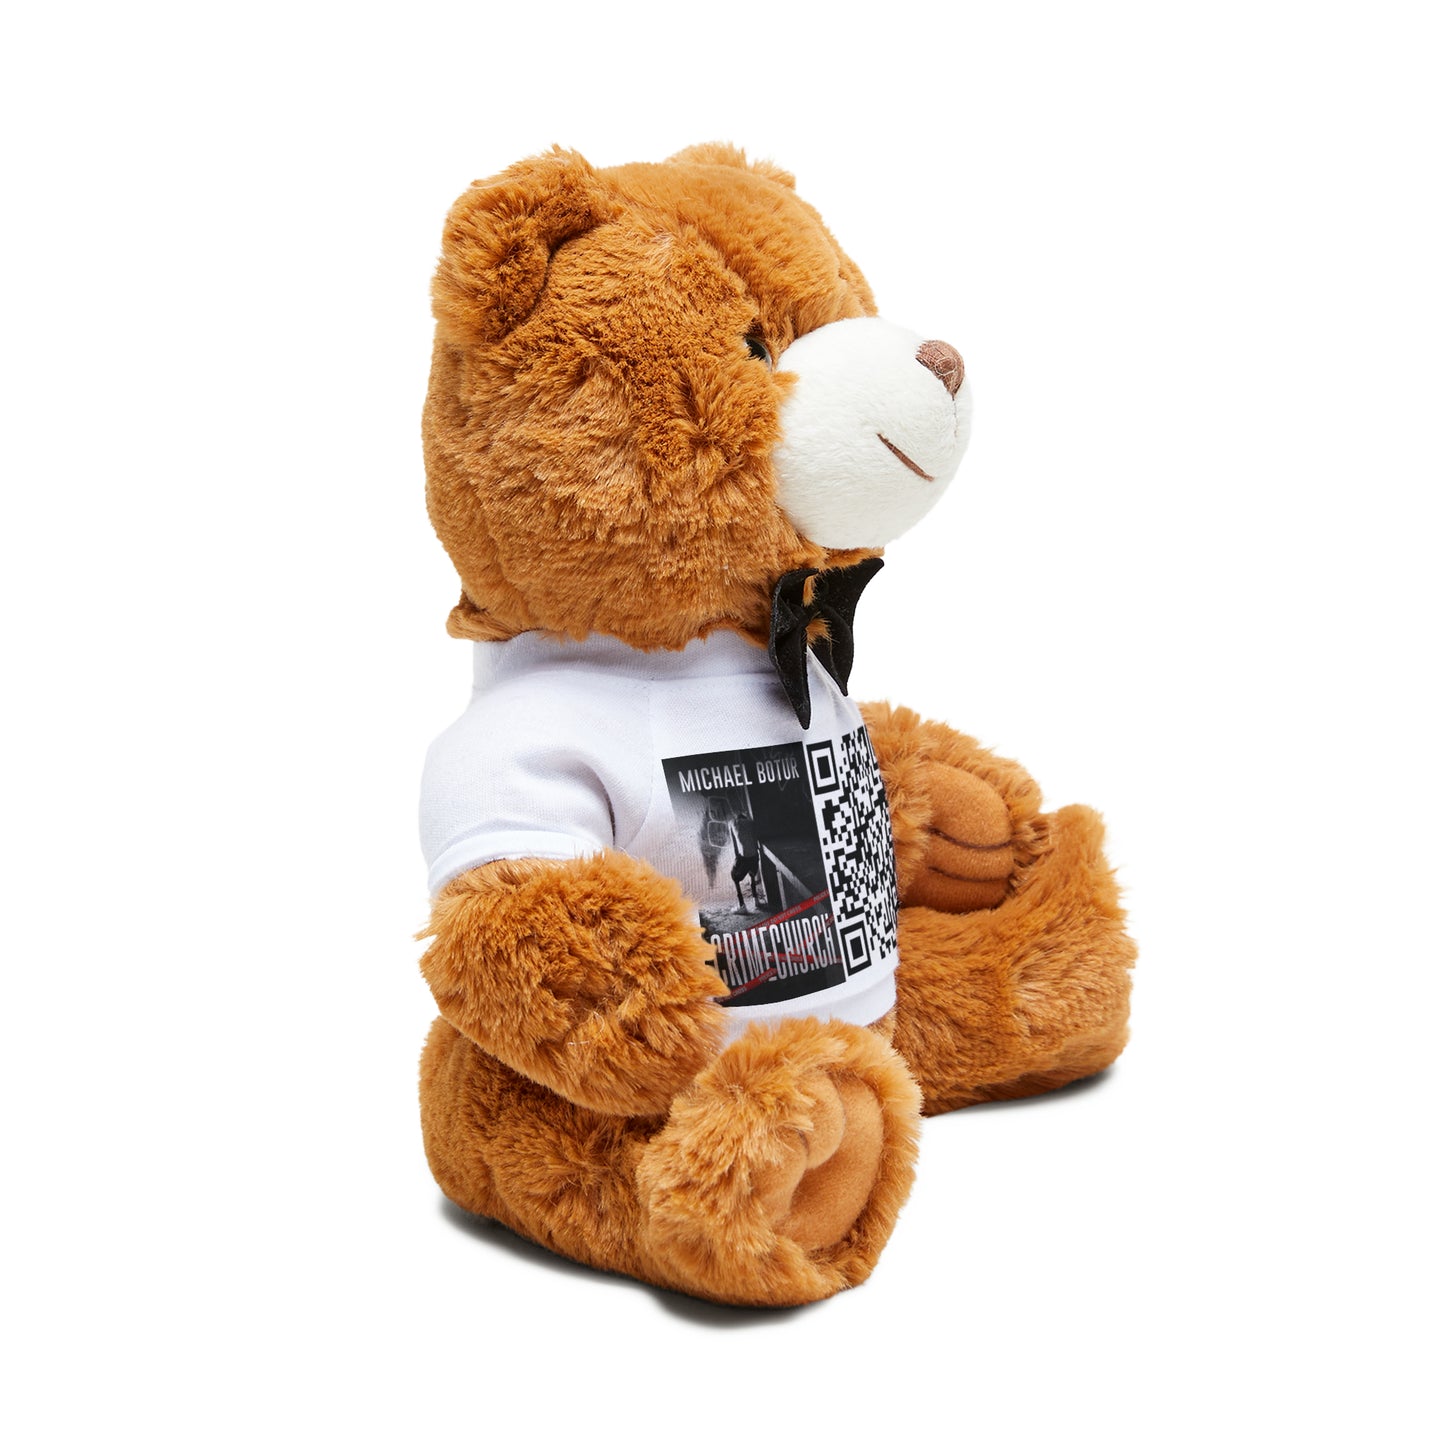 Crimechurch - Teddy Bear